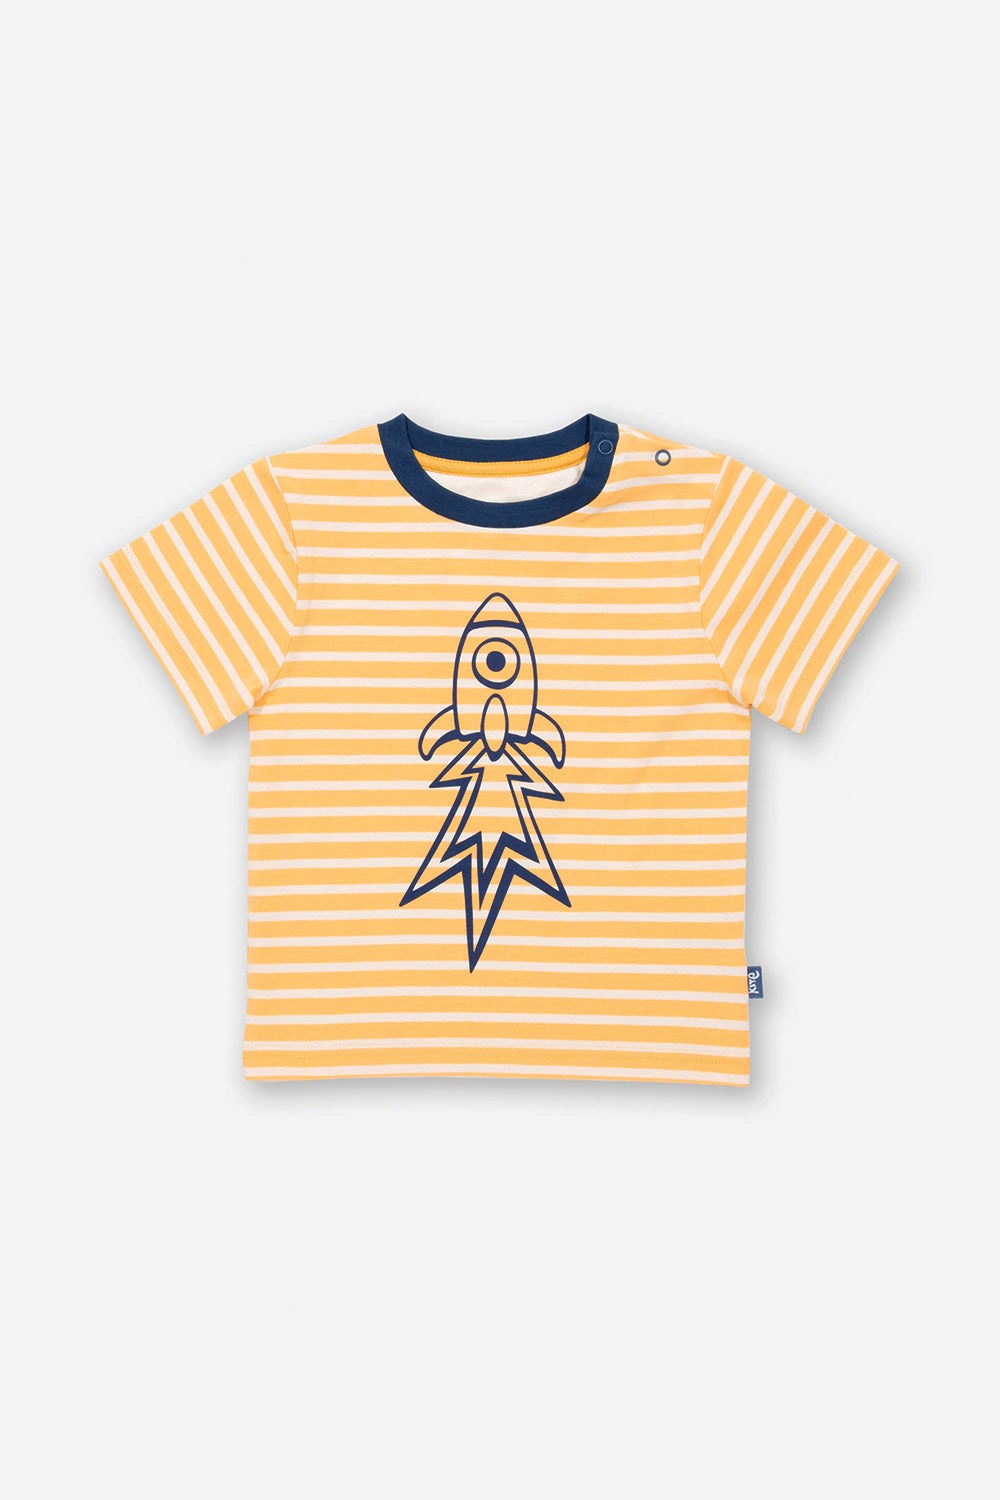 Rocket Blast Baby/Kids Organic Cotton T-Shirt -